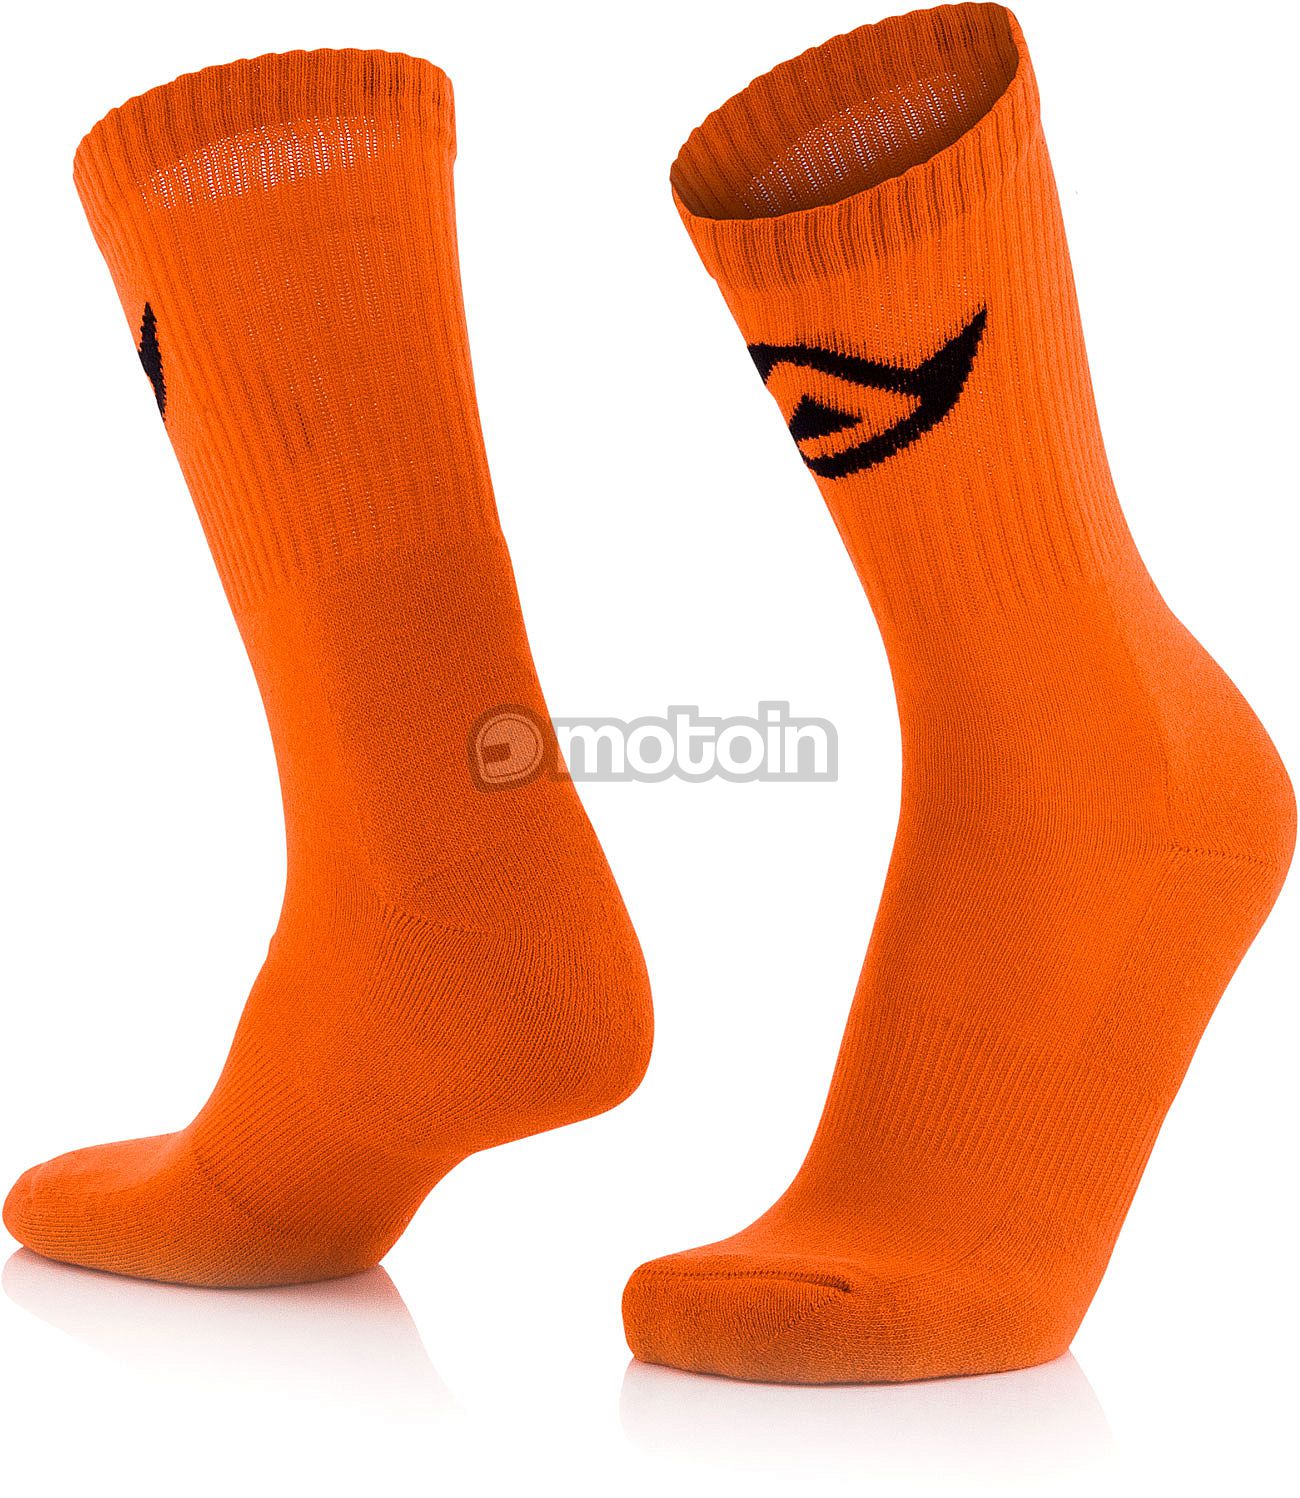 Acerbis Cotton, socks